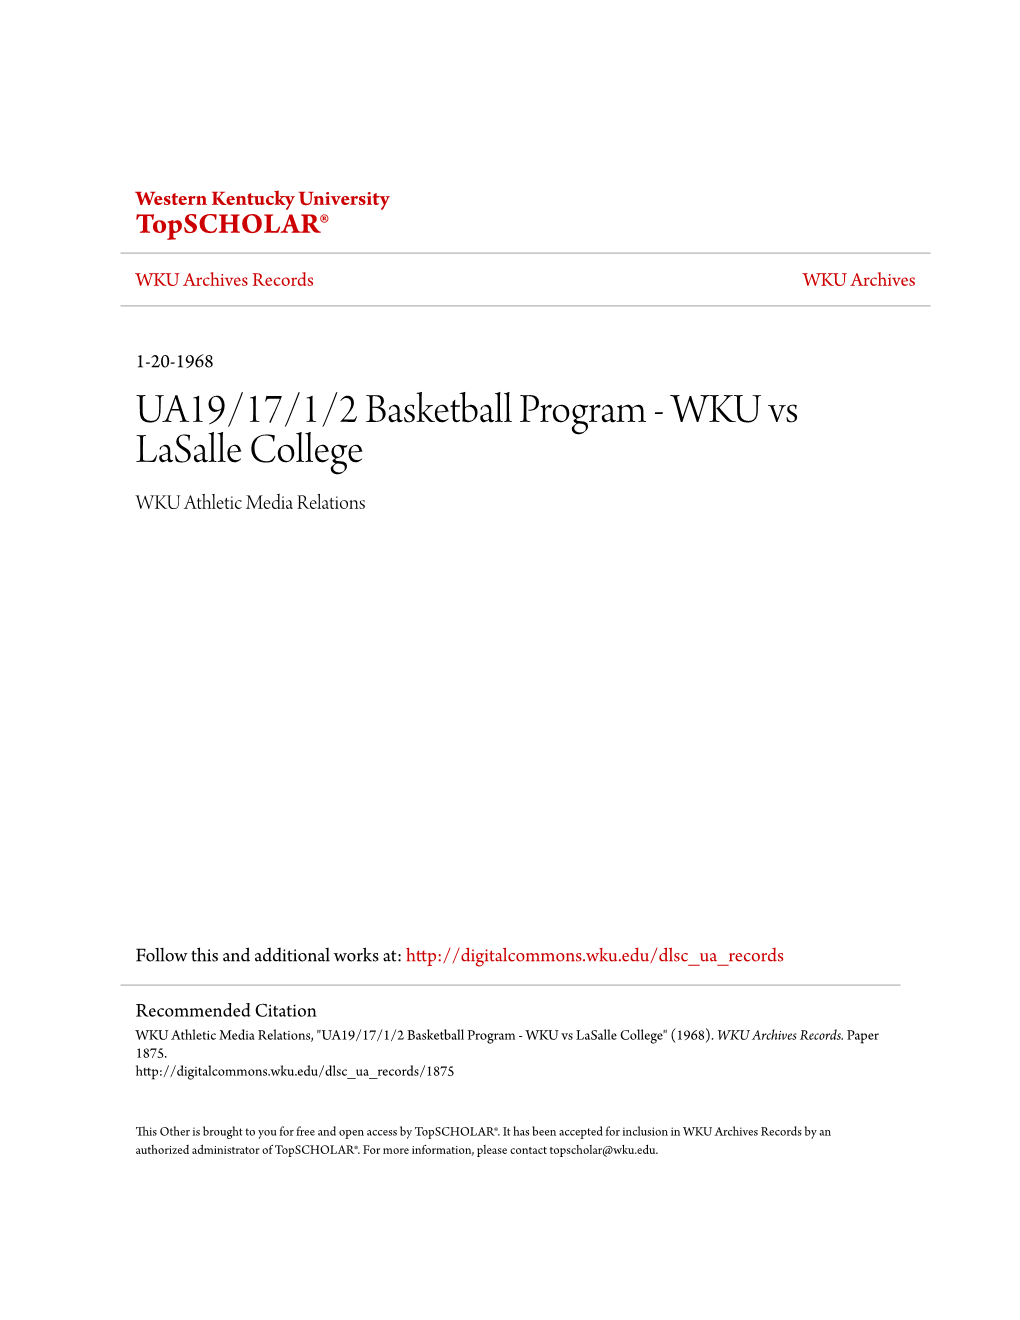 UA19/17/1/2 Basketball Program - WKU Vs Lasalle College WKU Athletic Media Relations